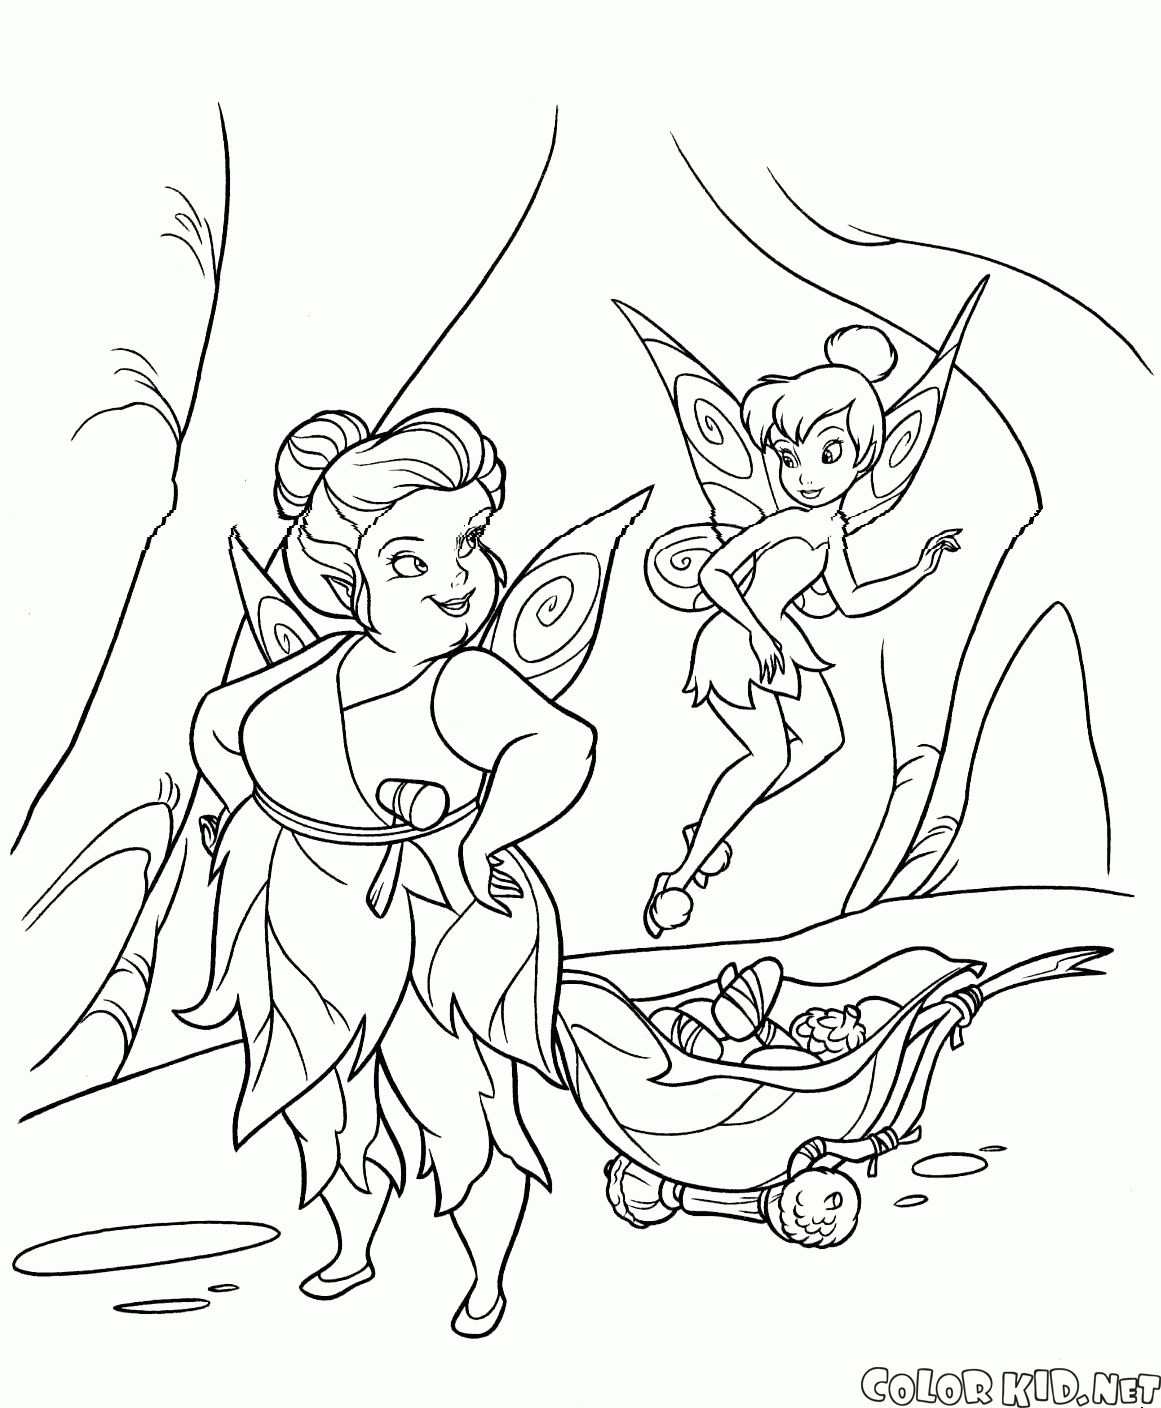 Fairy Mary und Tinkerbell